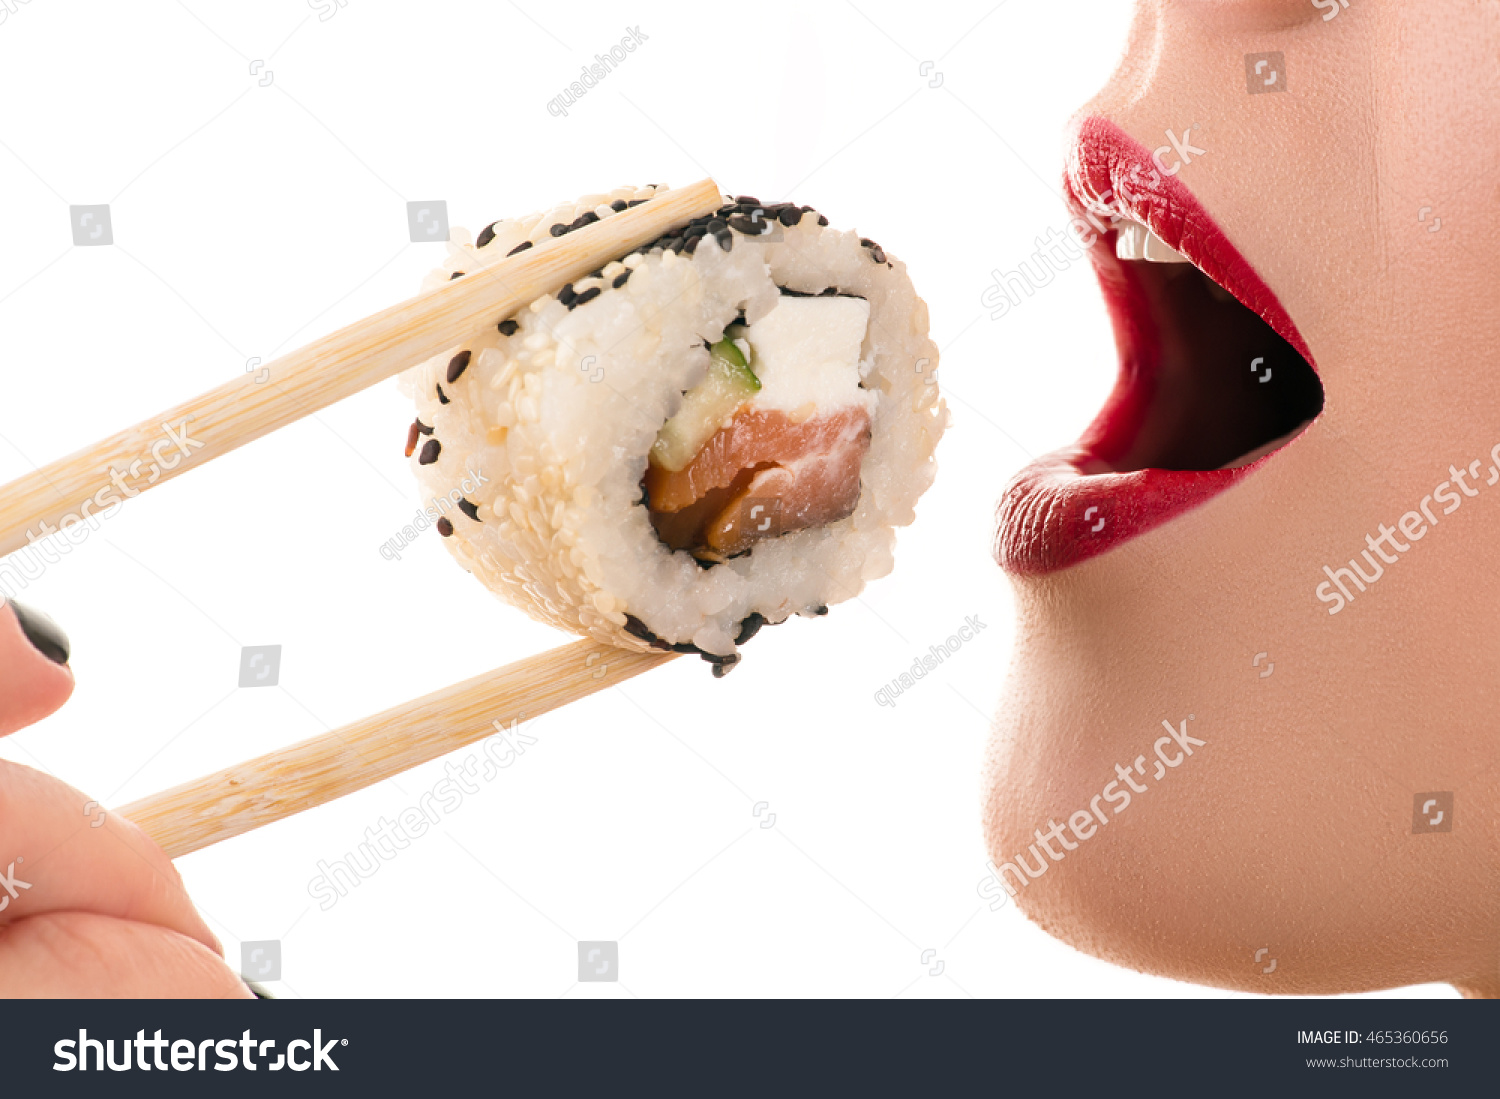 woman eating roll closeup #465360656